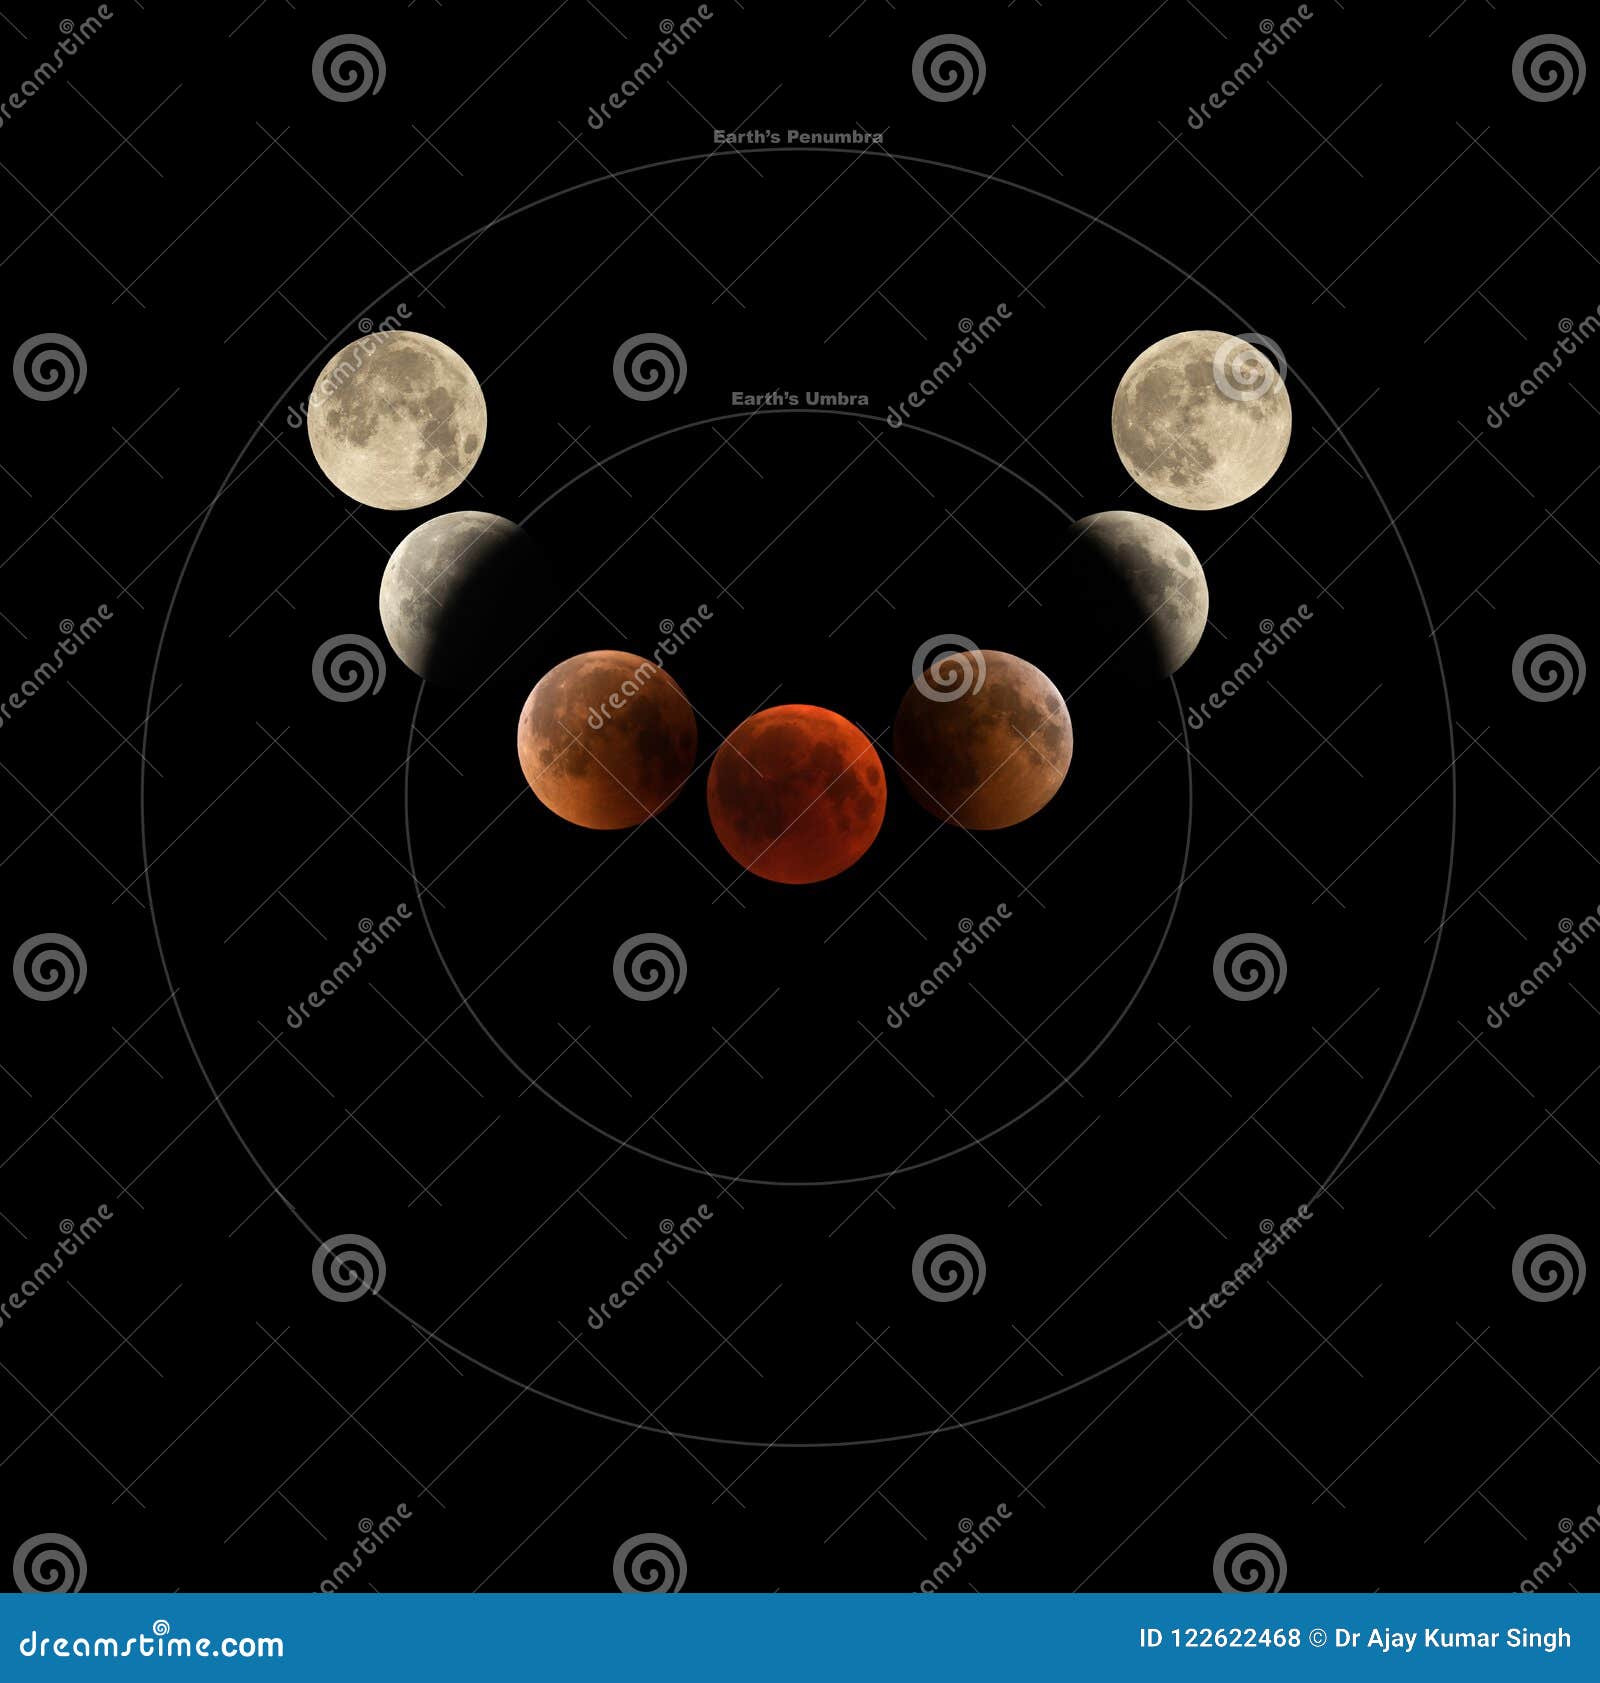  of penumbral, umbral and total lunar eclipse phases observed on 27 & 28 july 2018 at bahrain